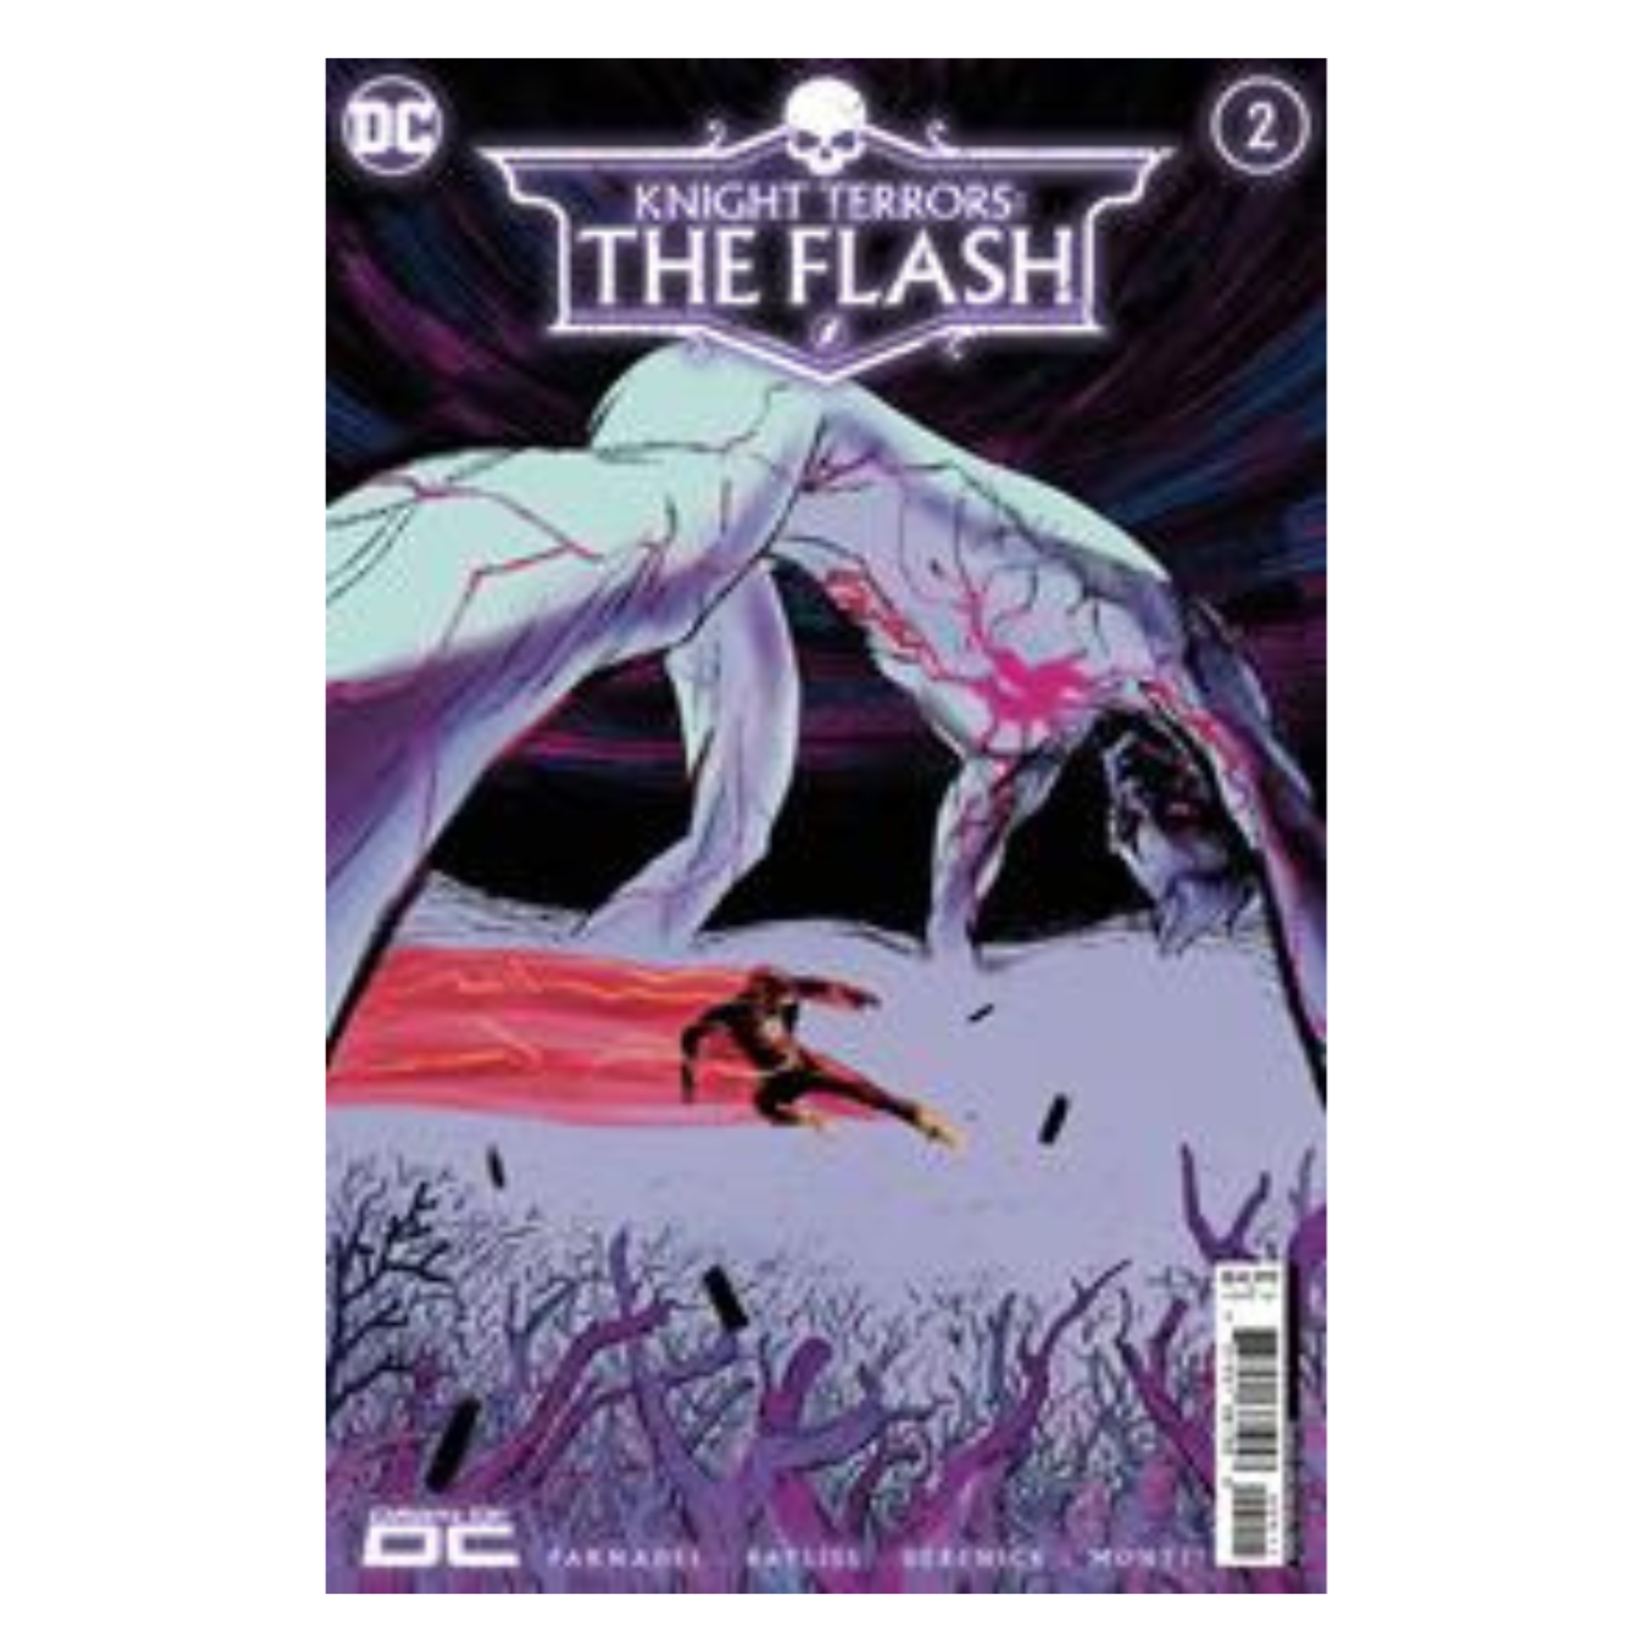 DC Comics Knight Terrors Flash #2 Cvr A Werther Dell Edera